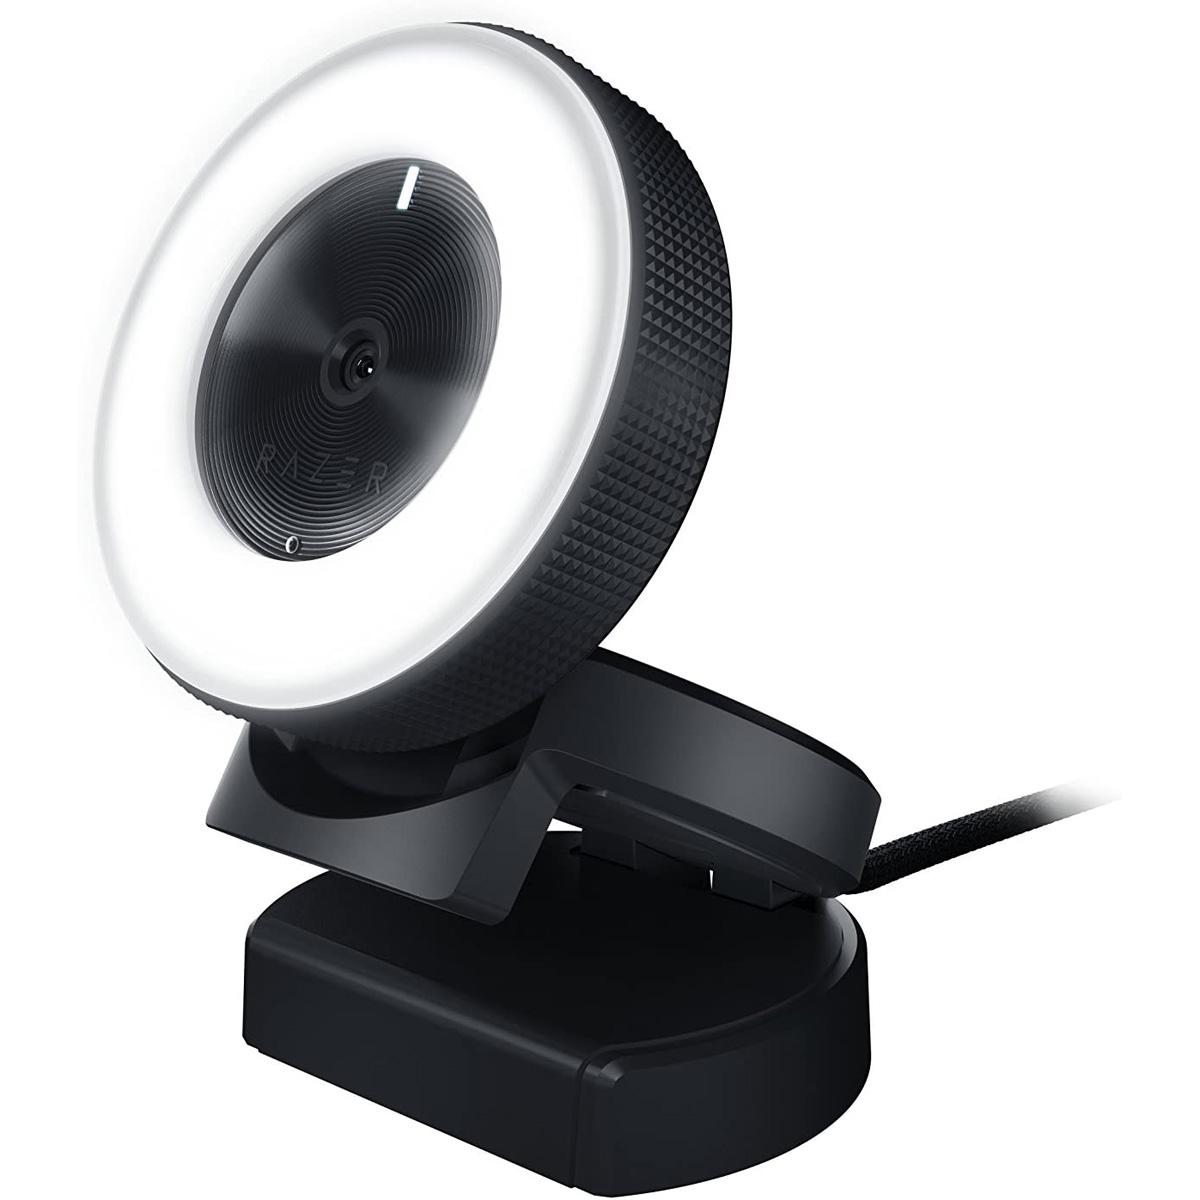 Razer Kiyo 1080p Streaming Webcam for $63.99 Shipped